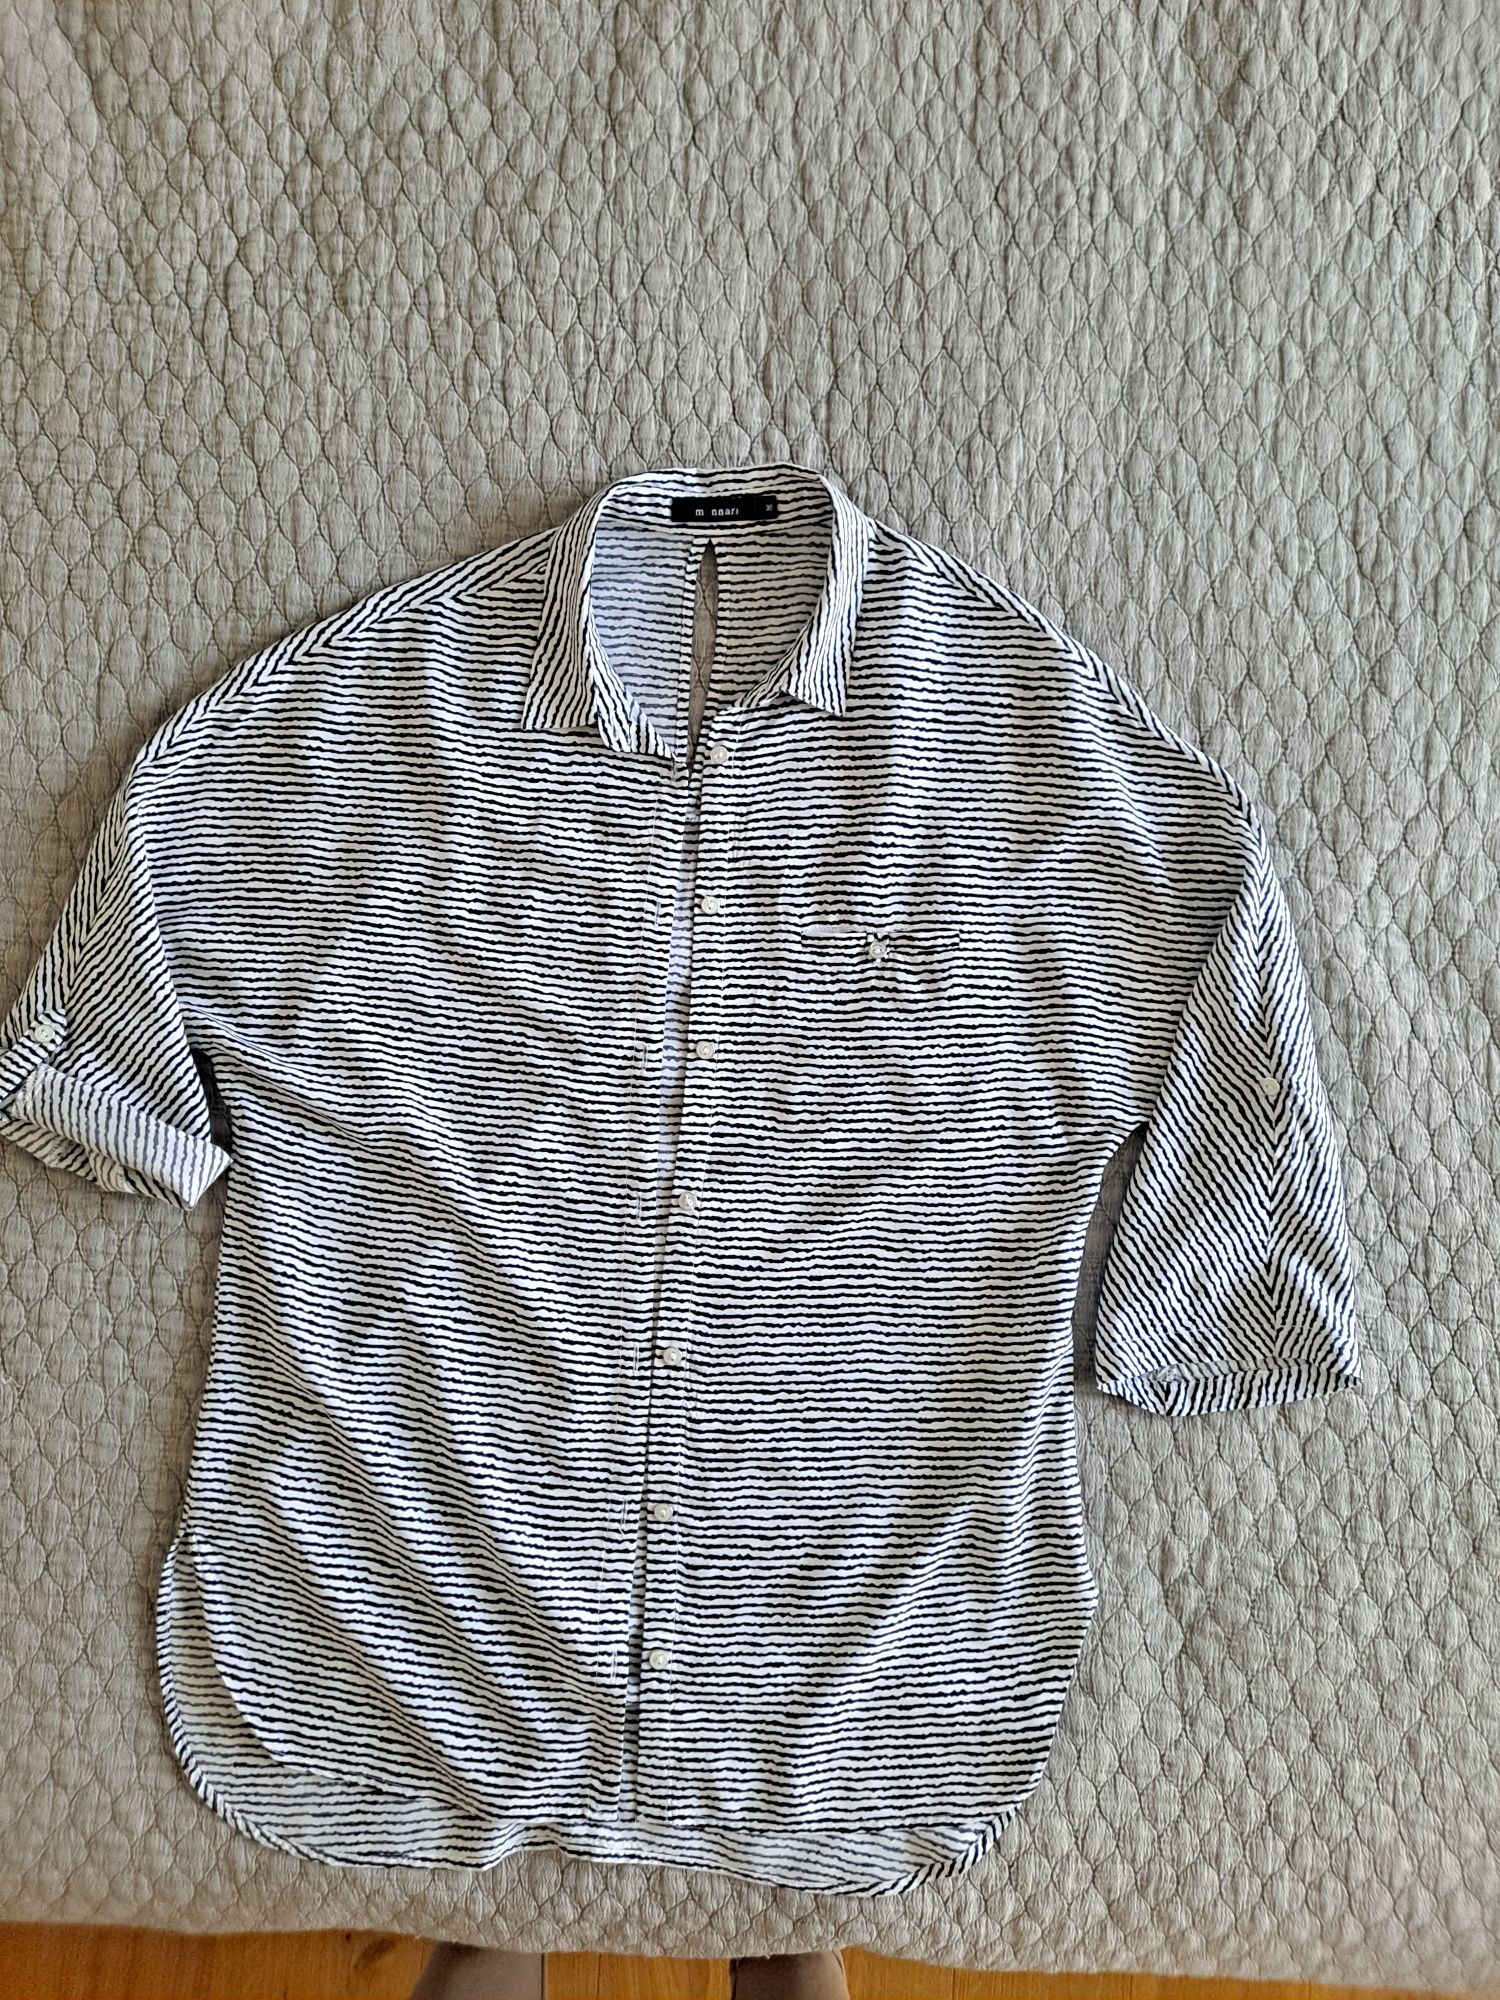 Delikatna biało-czarna koszula Monnari r.36